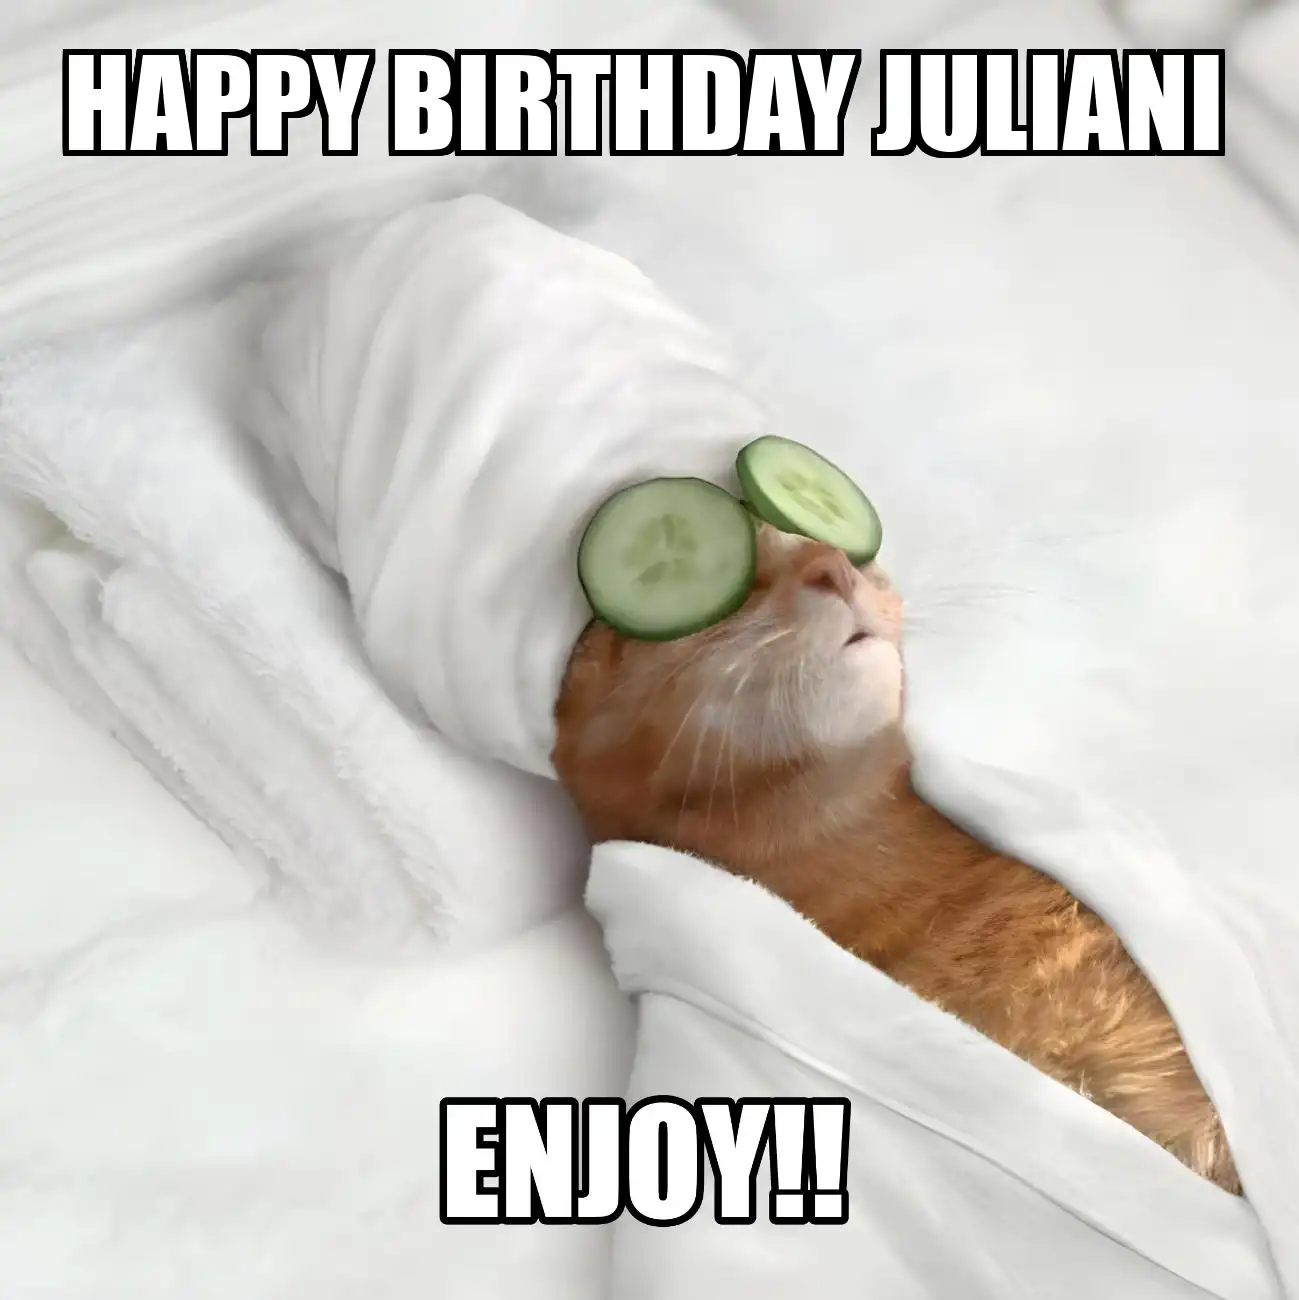 Happy Birthday Juliani Enjoy Cat Meme